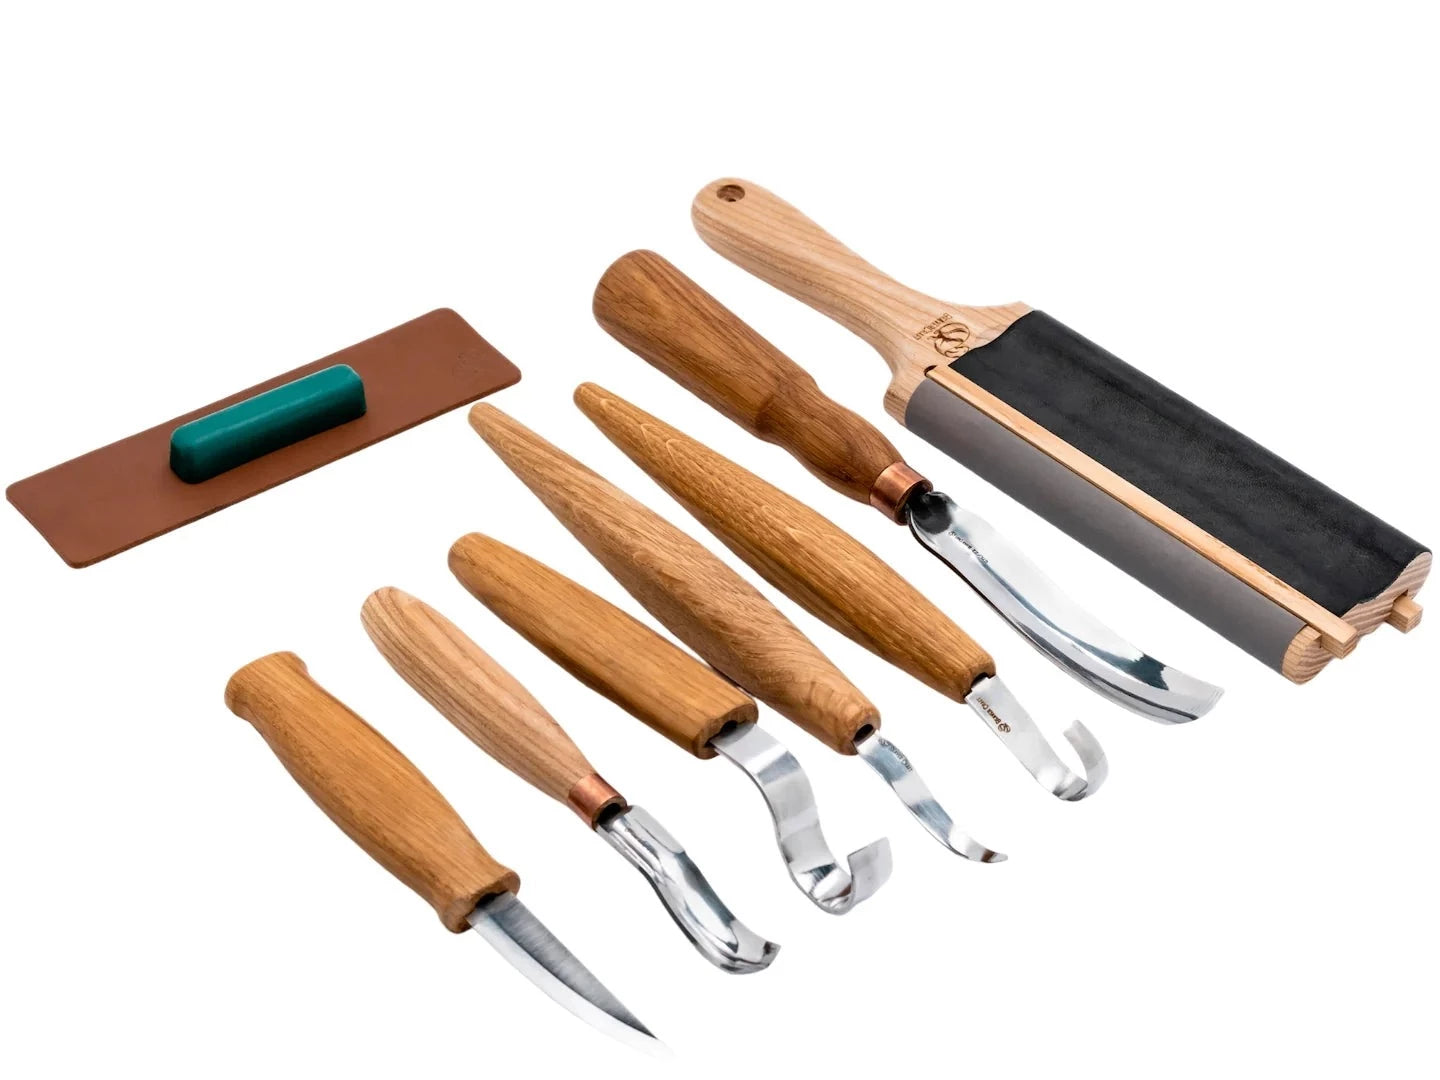 Beginner Carving Tools Kit - Unboxing the Beavercraft Woodcarving Kit. 